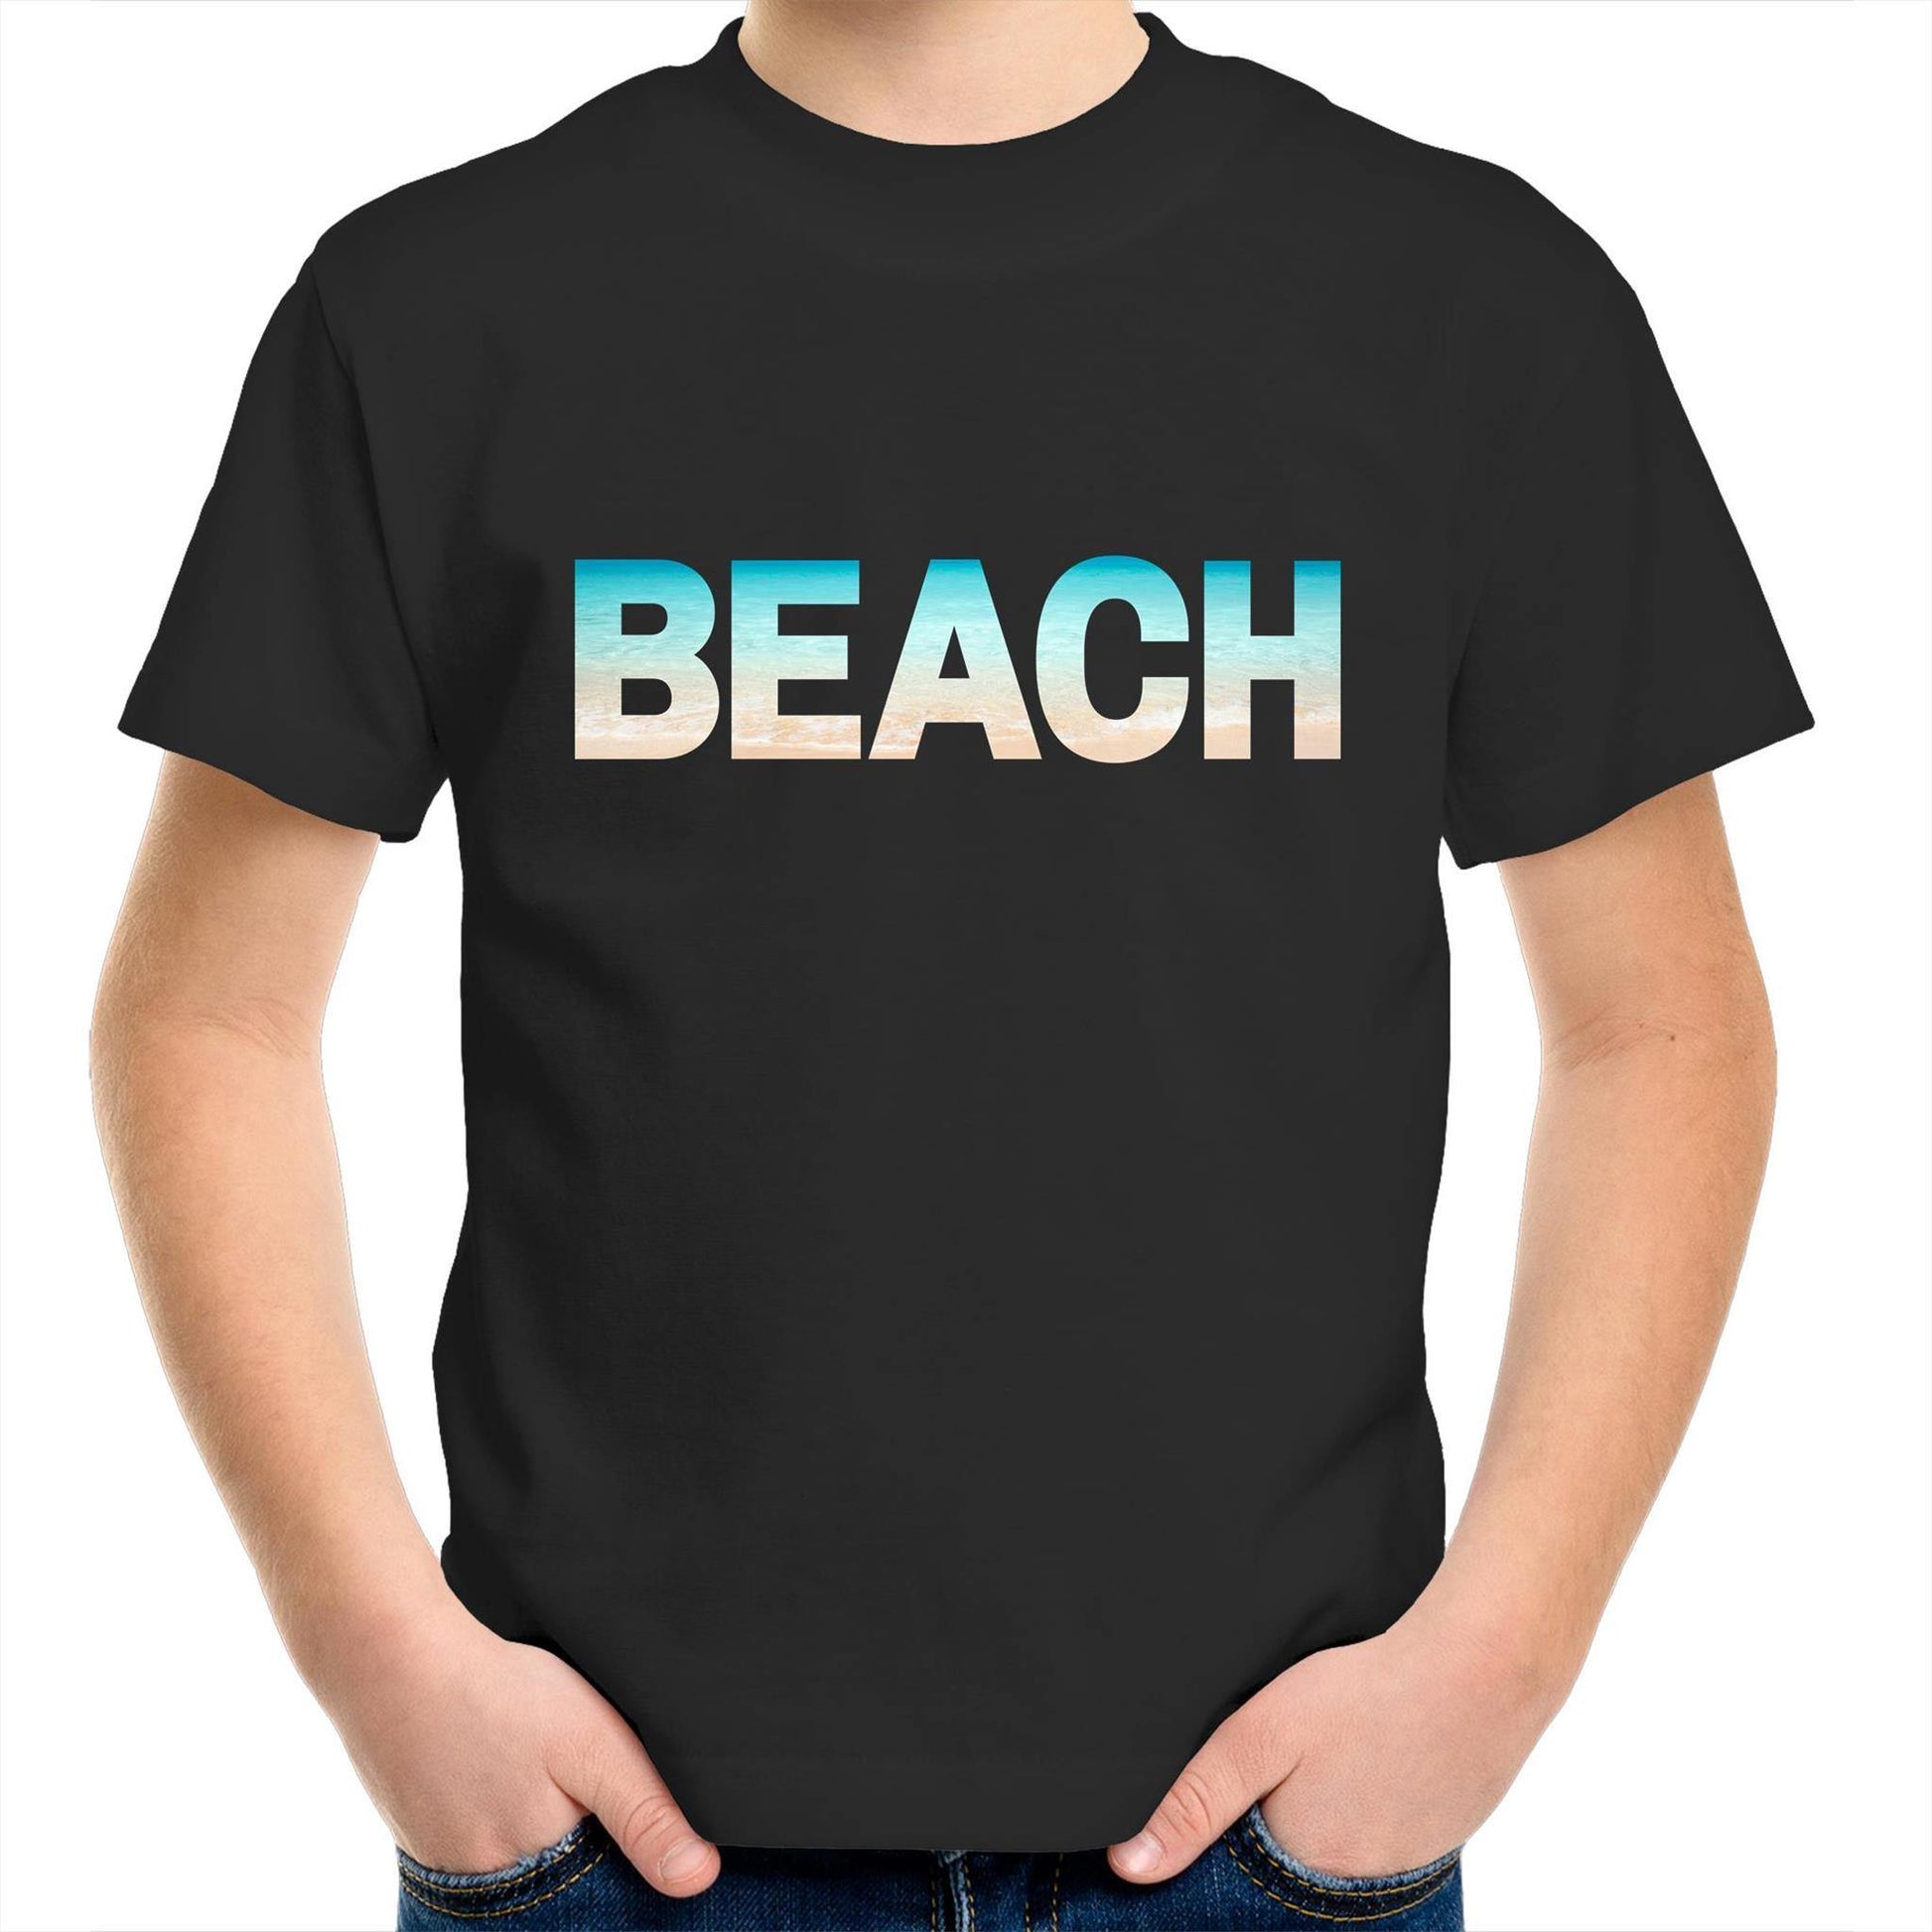 Beach - Kids Youth Crew T-Shirt Black Kids Youth T-shirt Summer